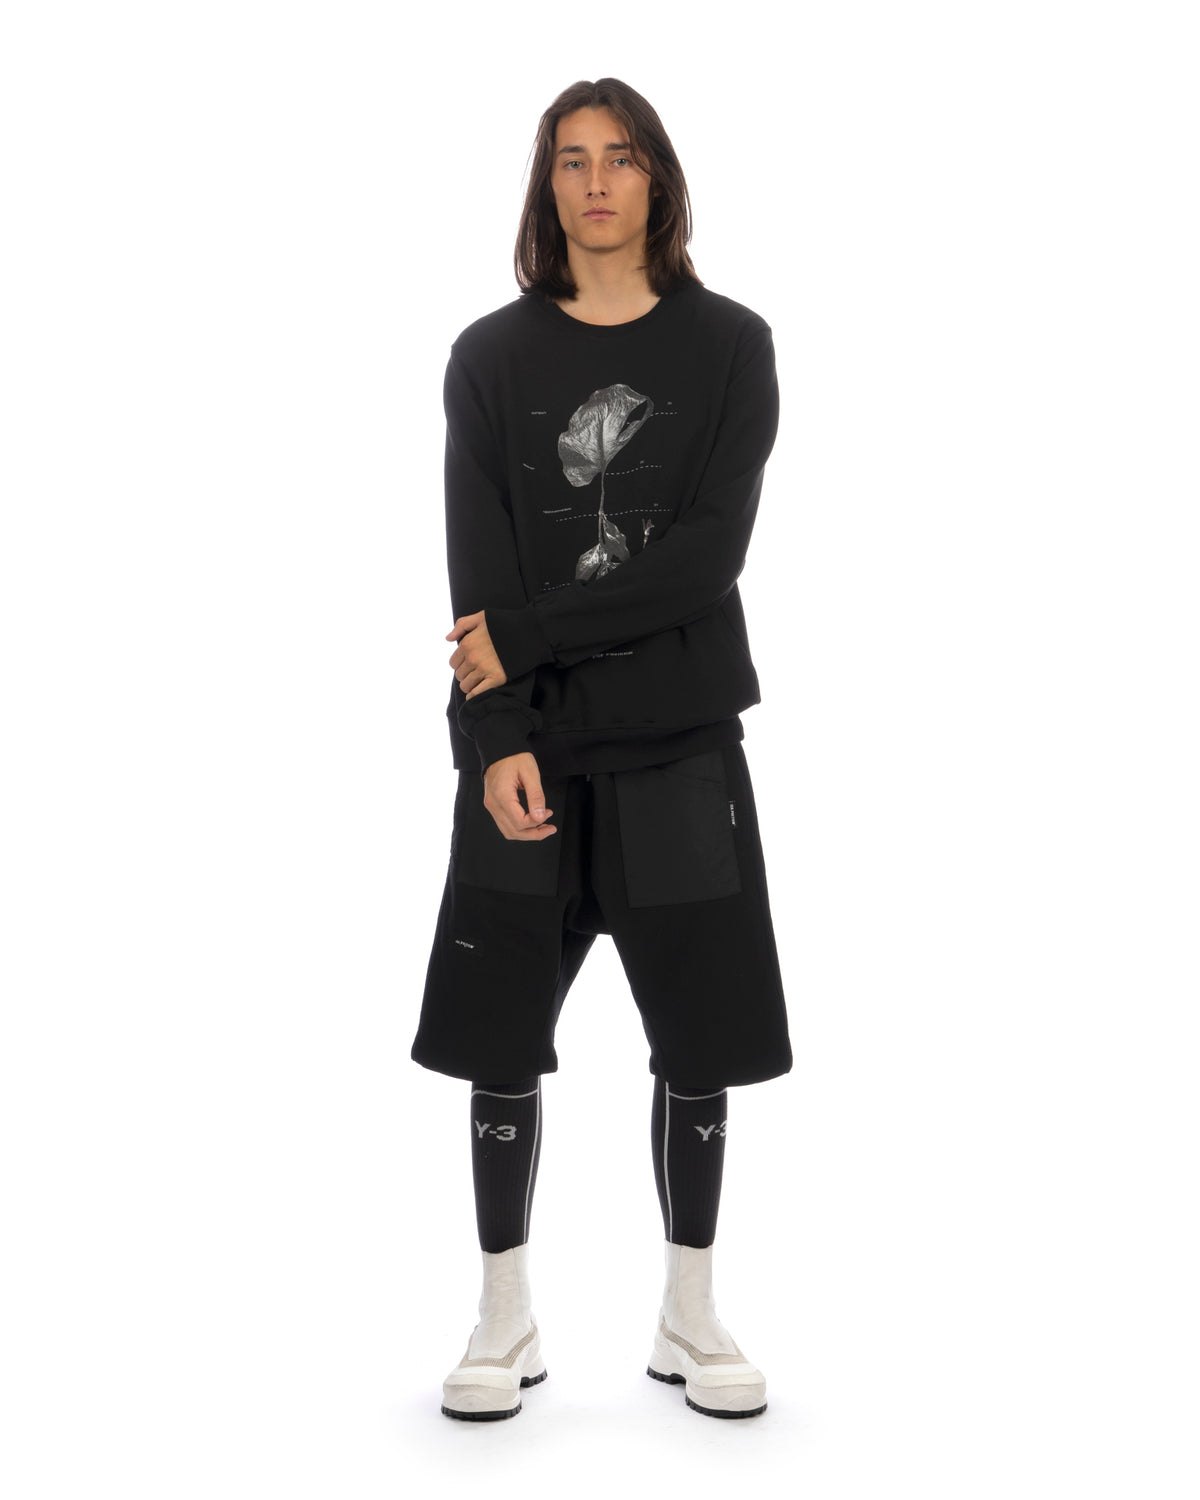 TOBIAS BIRK NIELSEN | SH10 Mixed Fabrics Shorts Black - Concrete